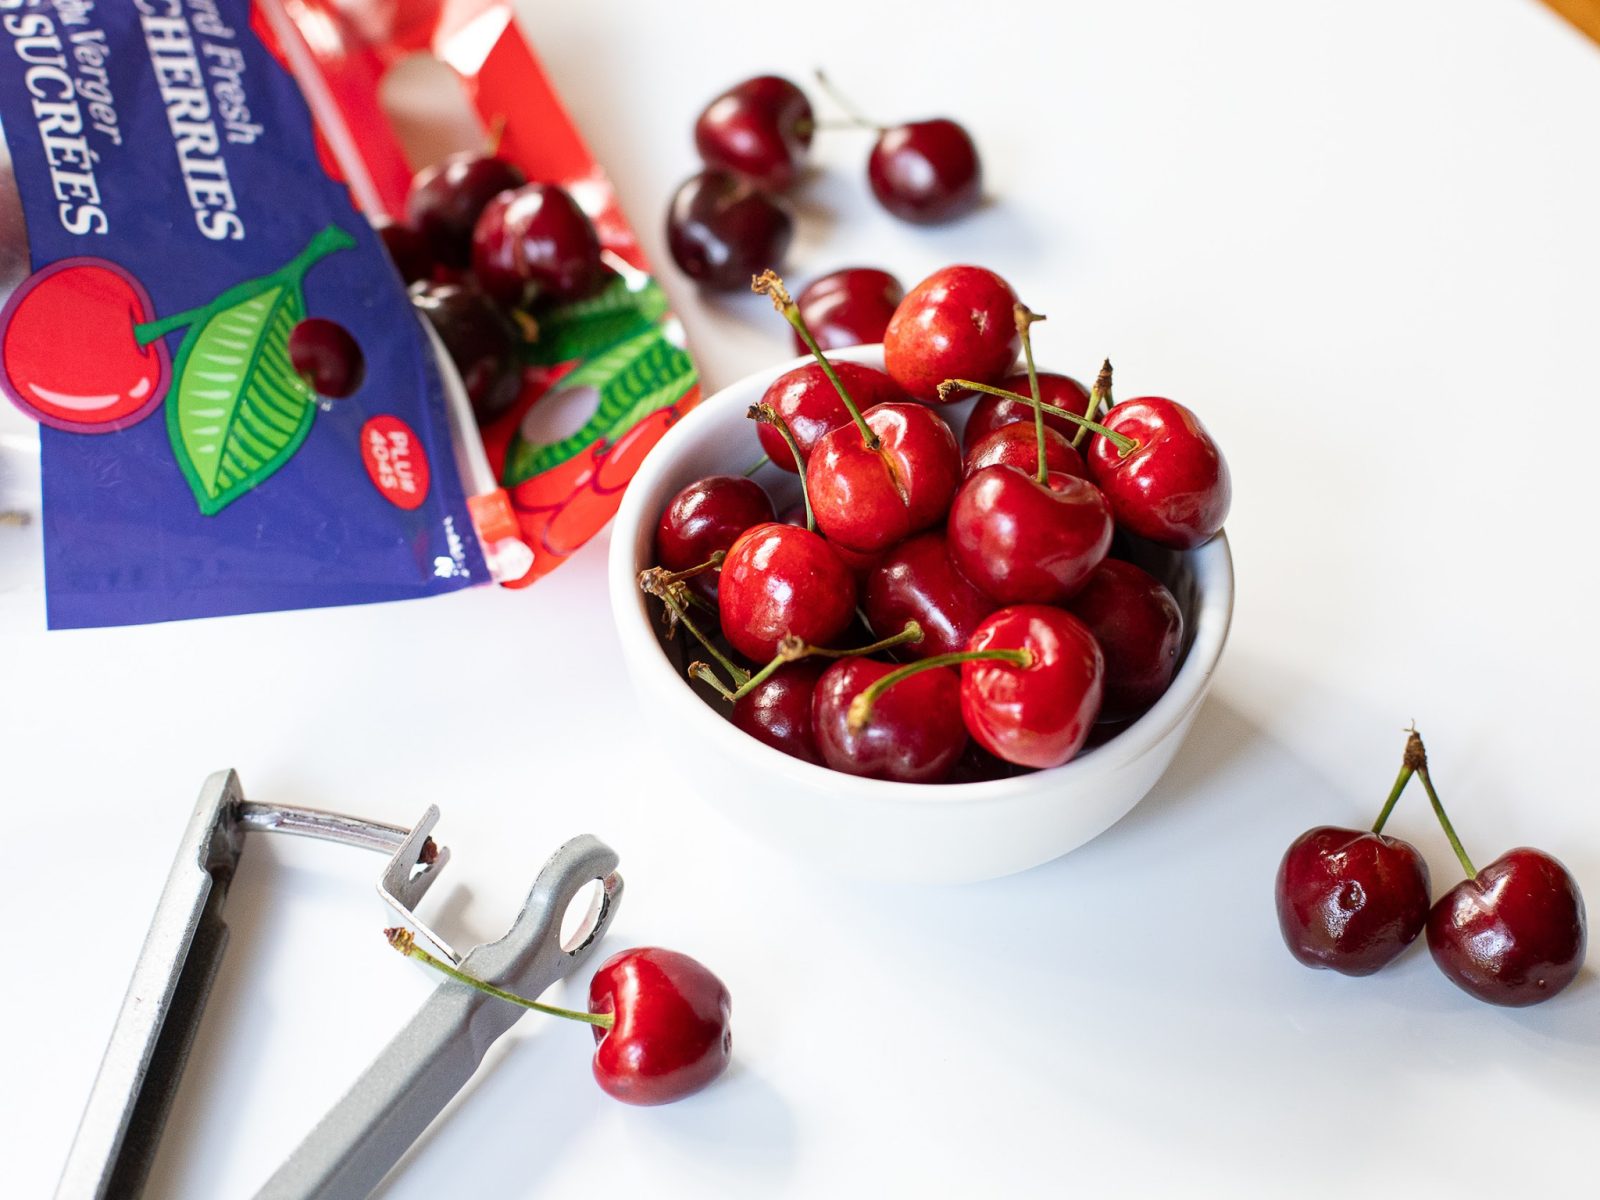 Washington Red Cherries Just $1.99 Per Pound At Kroger